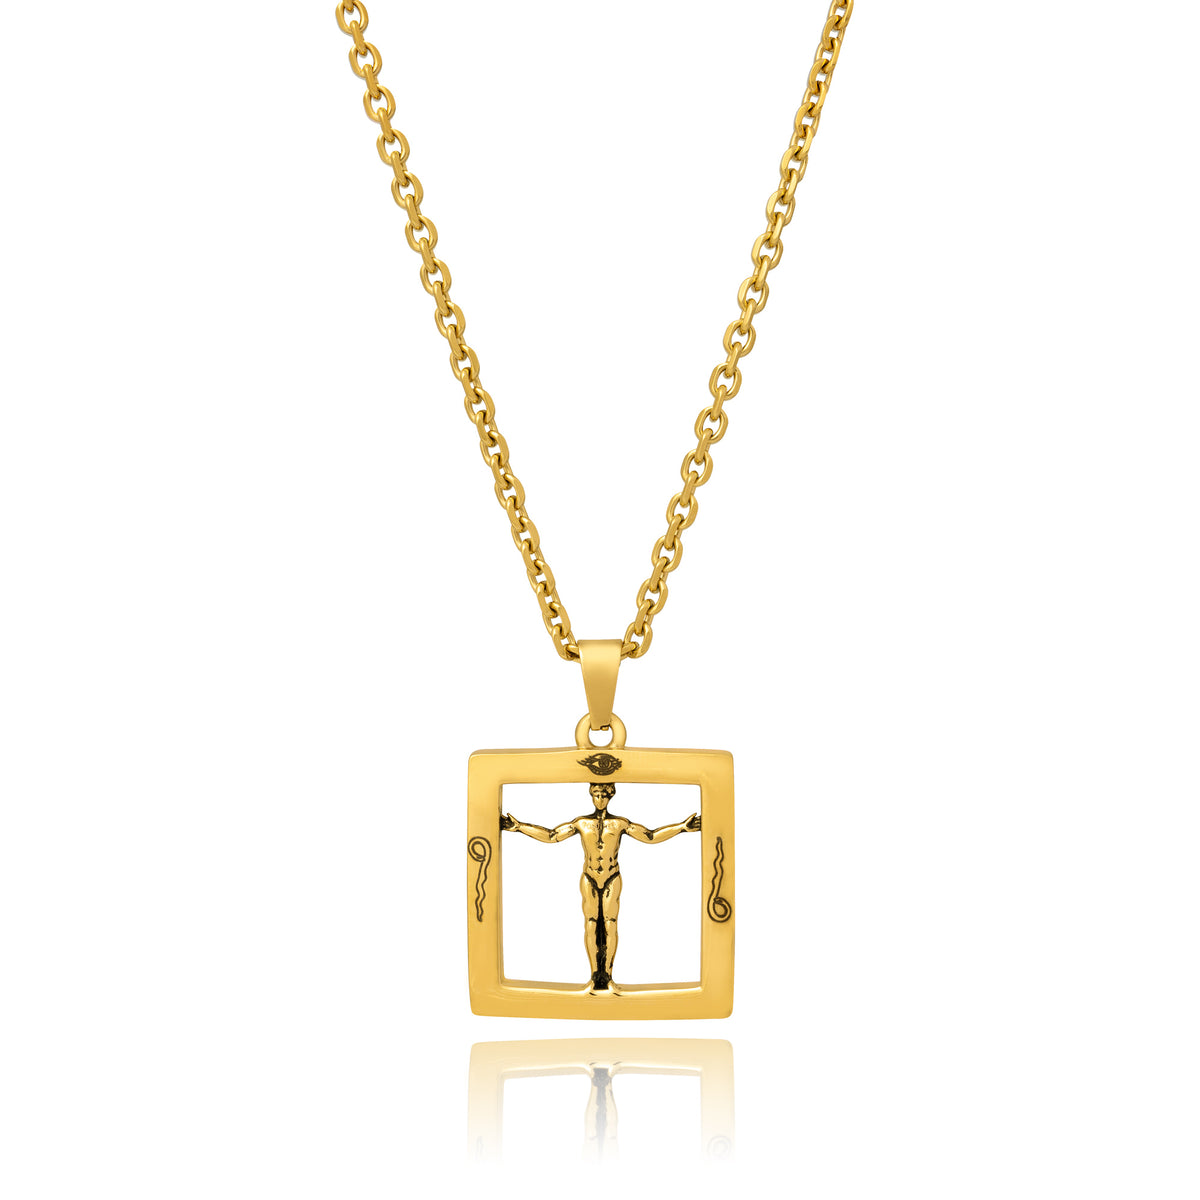 Symbolic dainty charm pendantin gold